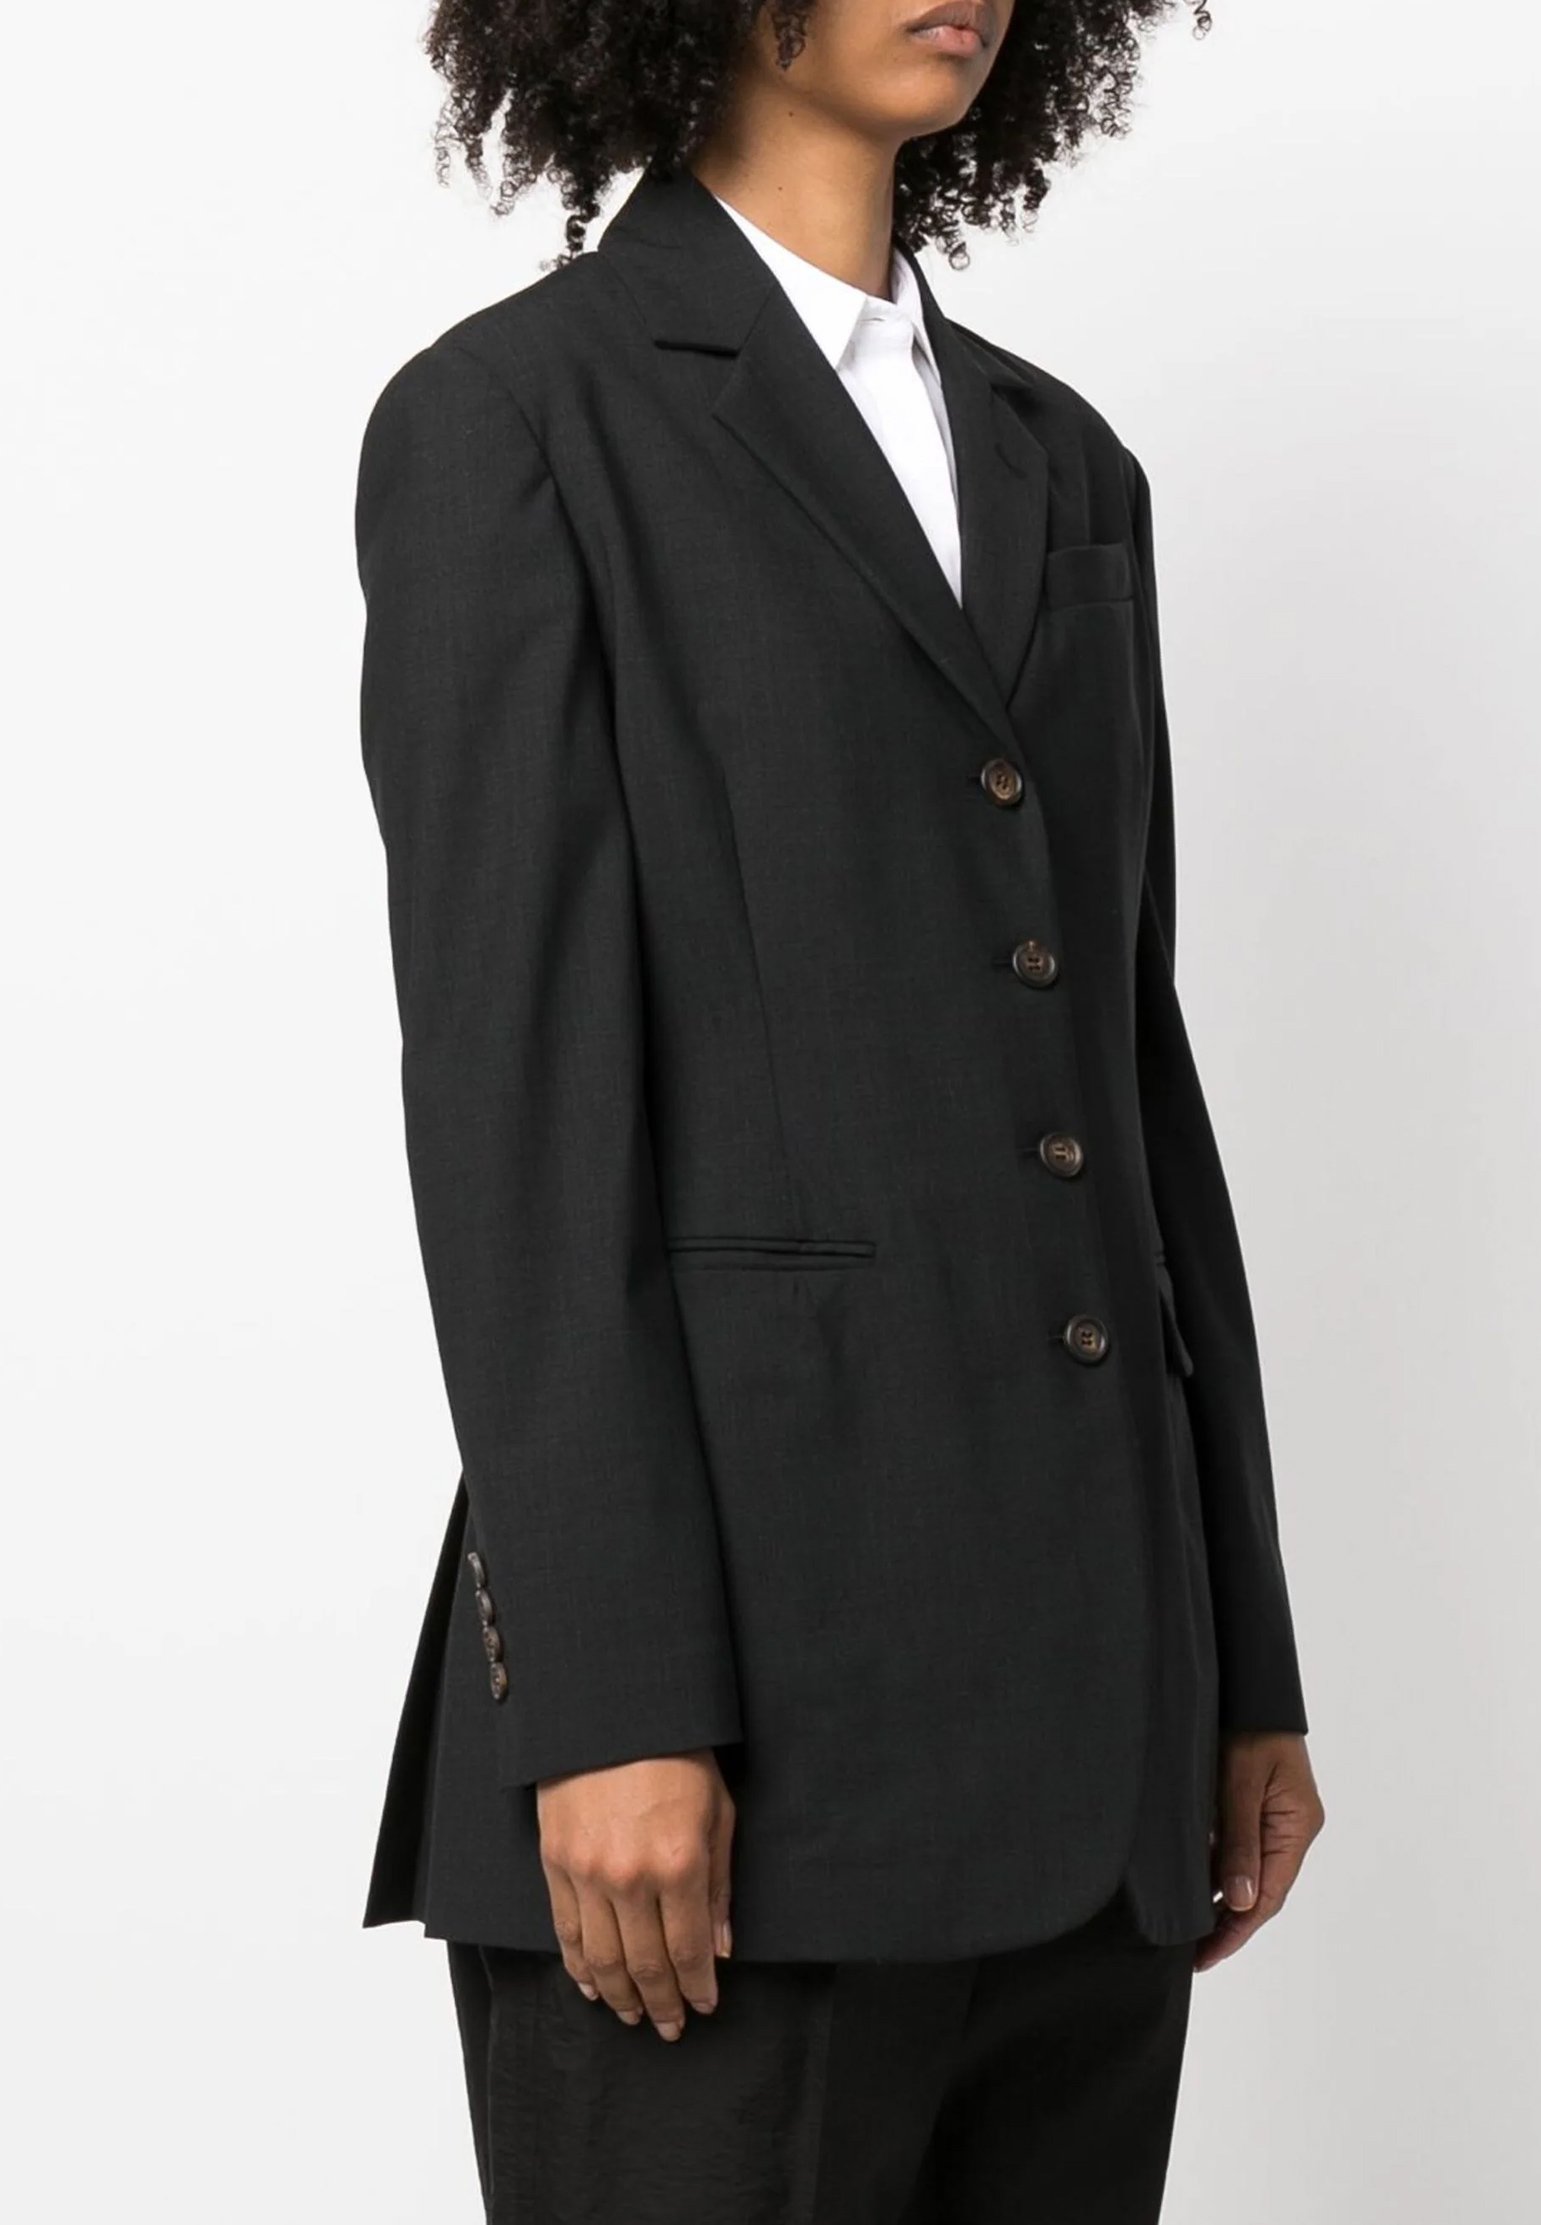 Jacket BRUNELLO CUCINELLI Color: black (Code: 2426) in online store Allure